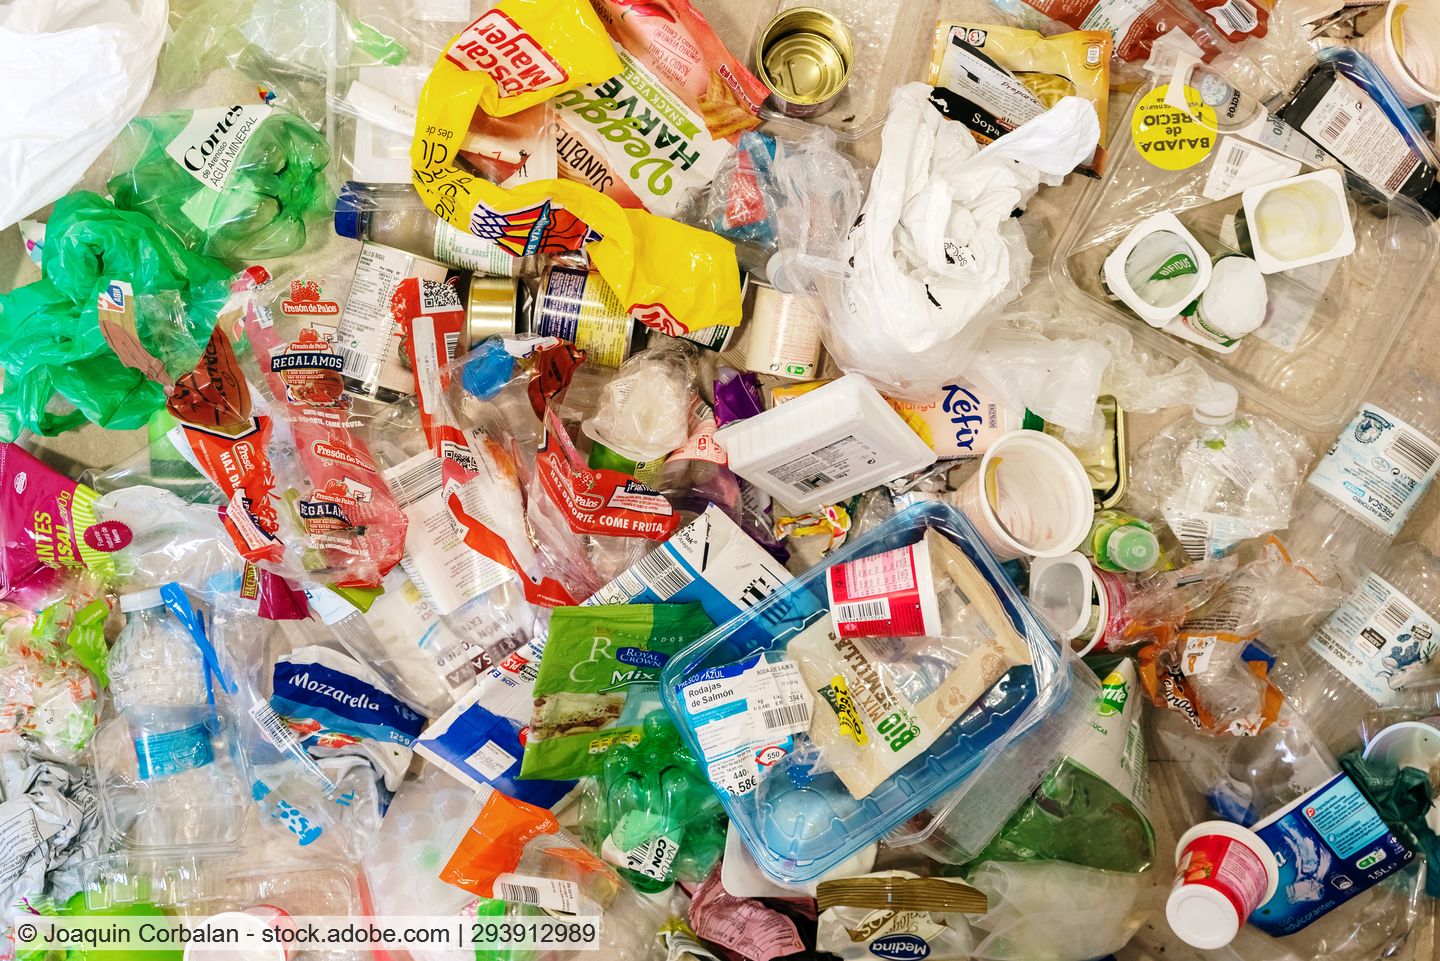 Recyclinggerechte Verpackungen: ZSVR überarbeitet Mindeststandards